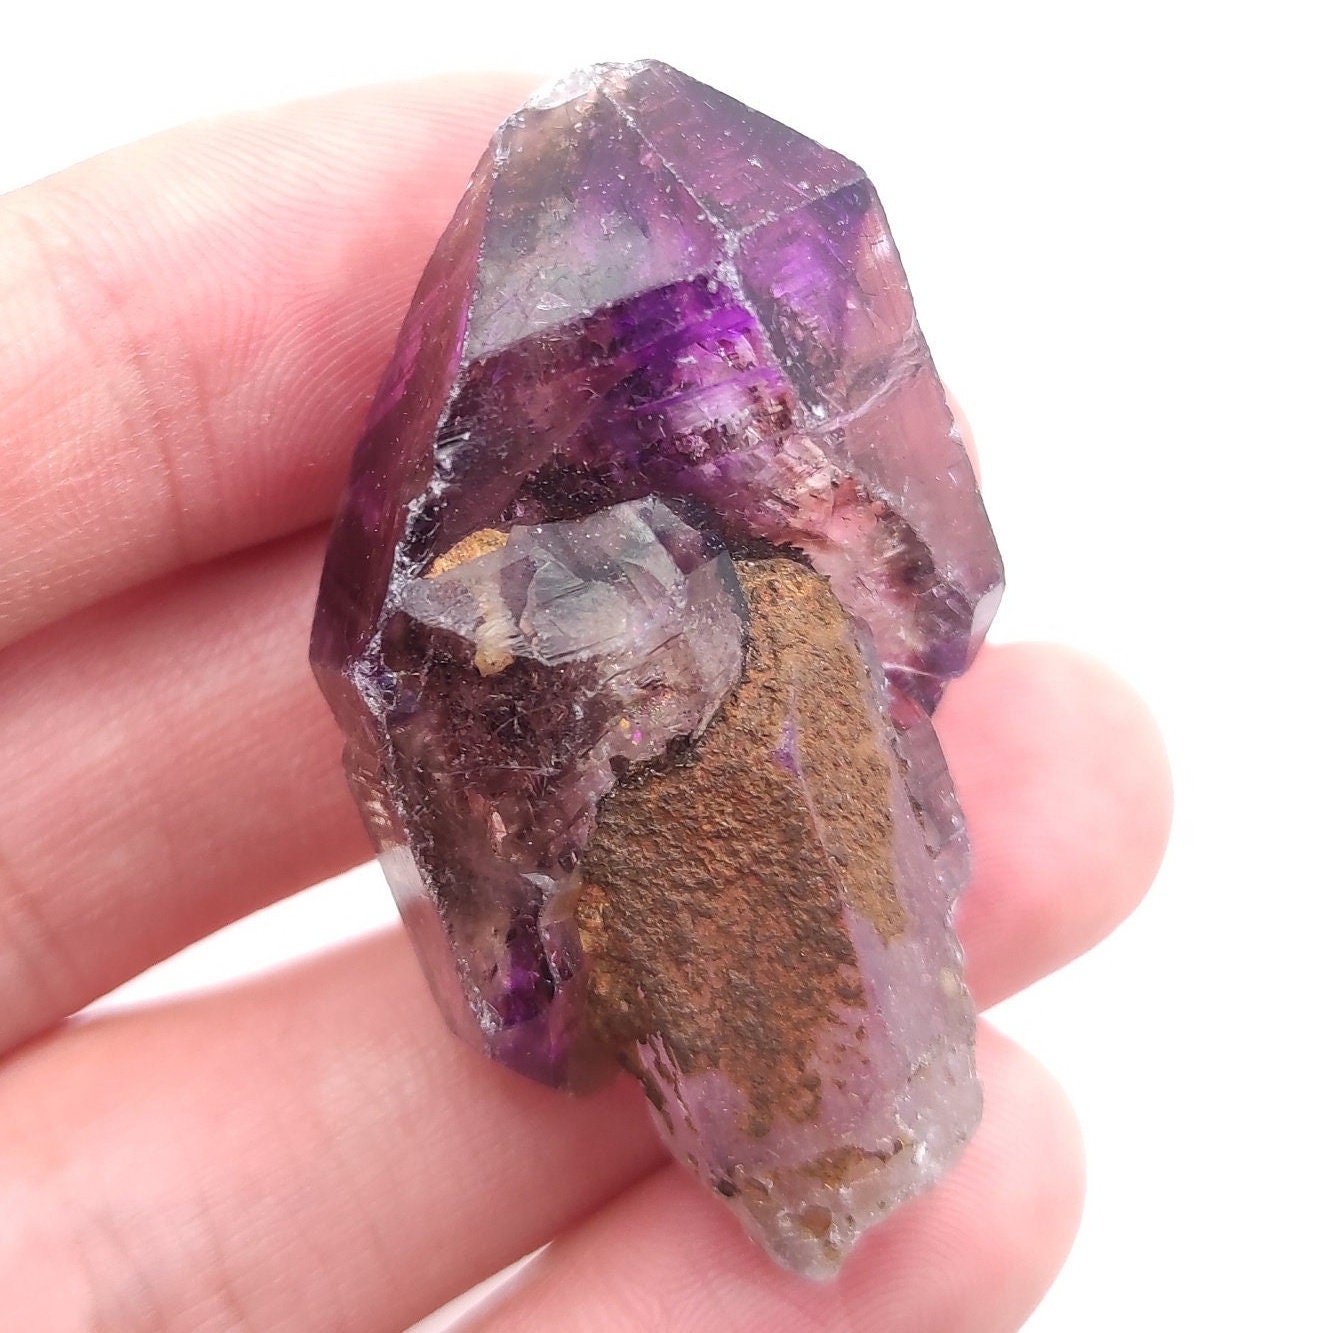 22g Natural Super Seven Amethyst Crystal - Rare Melodys Stone - Amethyst, Cacoxenite, Goethit, Lepidocrocite, Rutile, Smoky Quartz